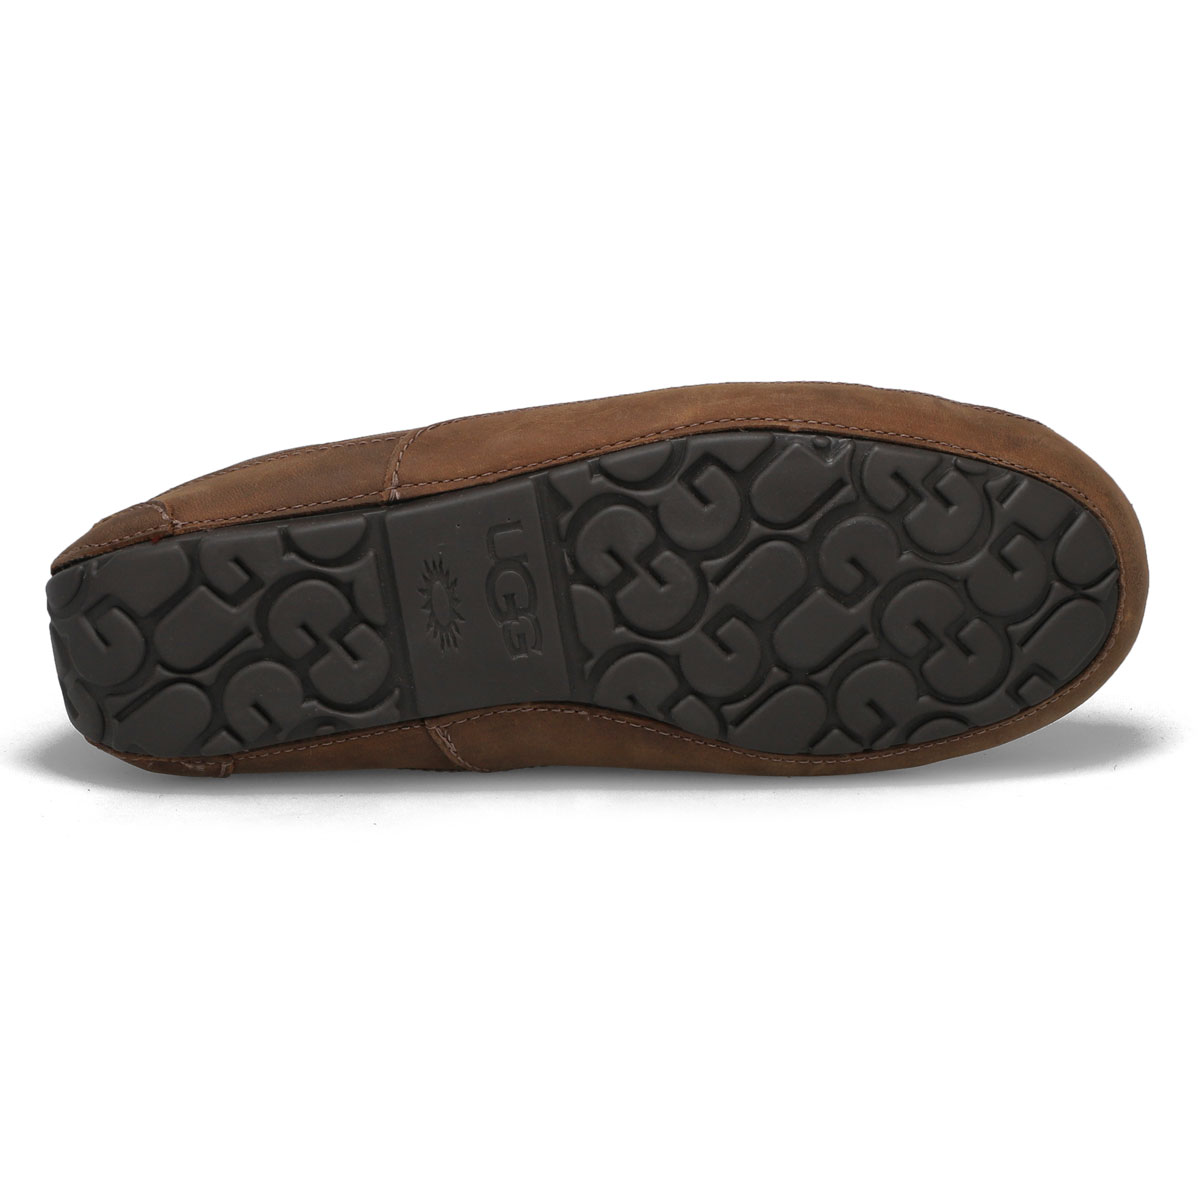 Men's ASCOT tan sheepskin slippers